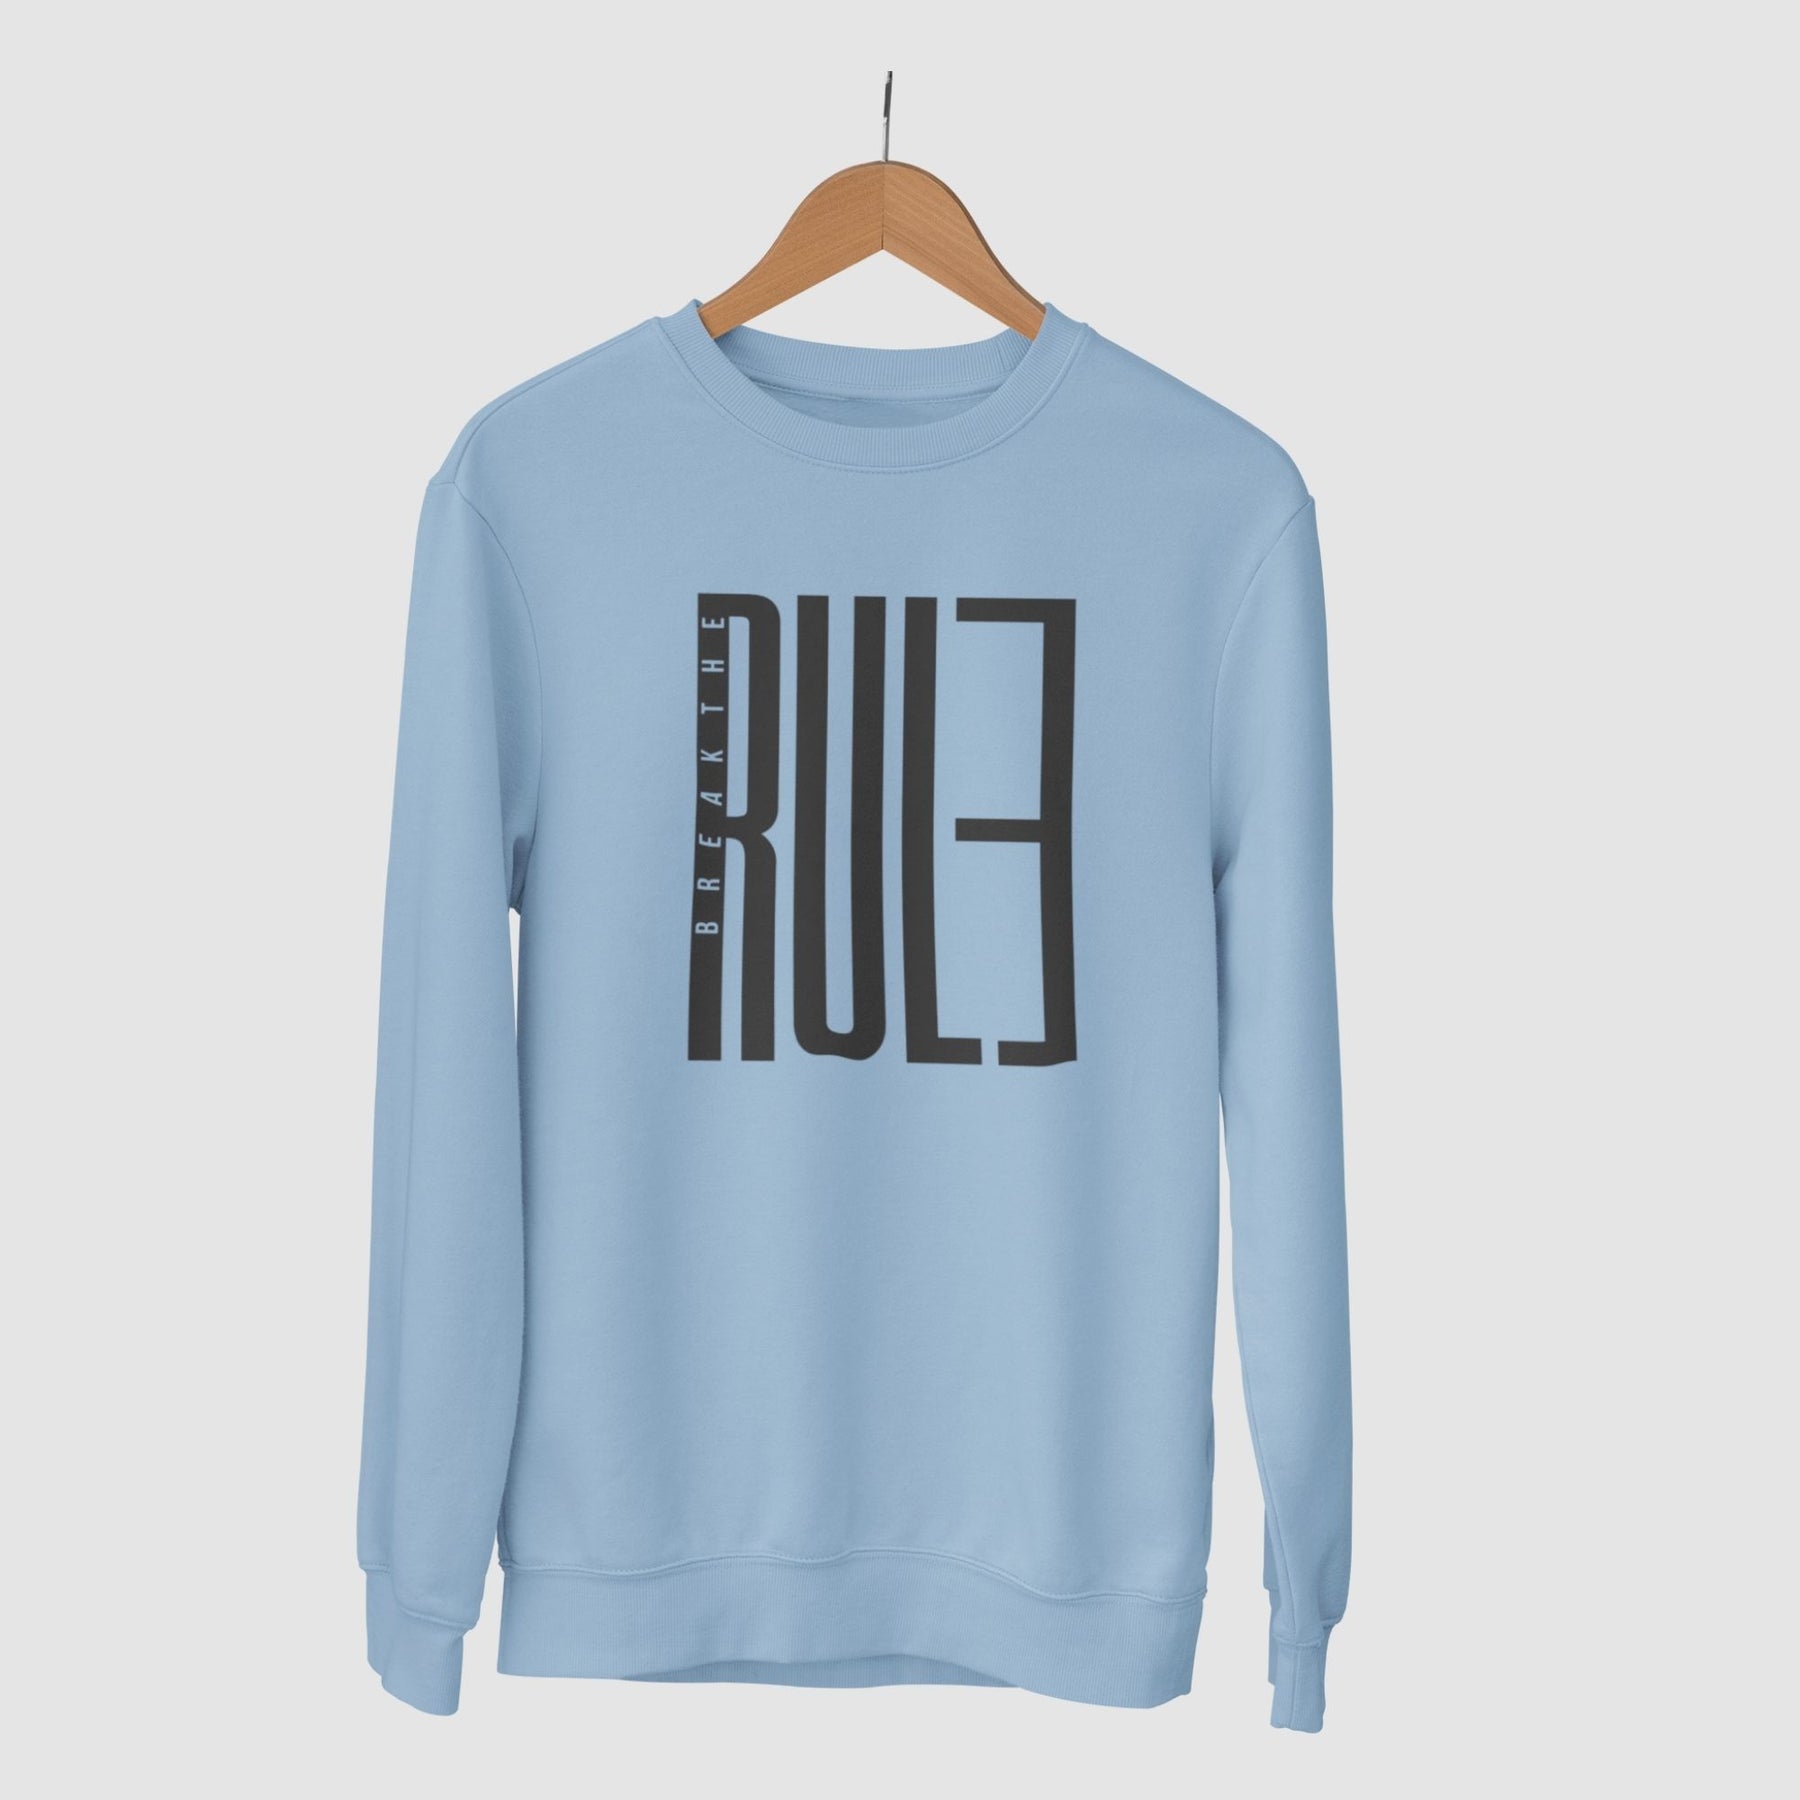 break-the-rule-cotton-printed-unisex-light-blue-sweatshirt-gogirgit-com